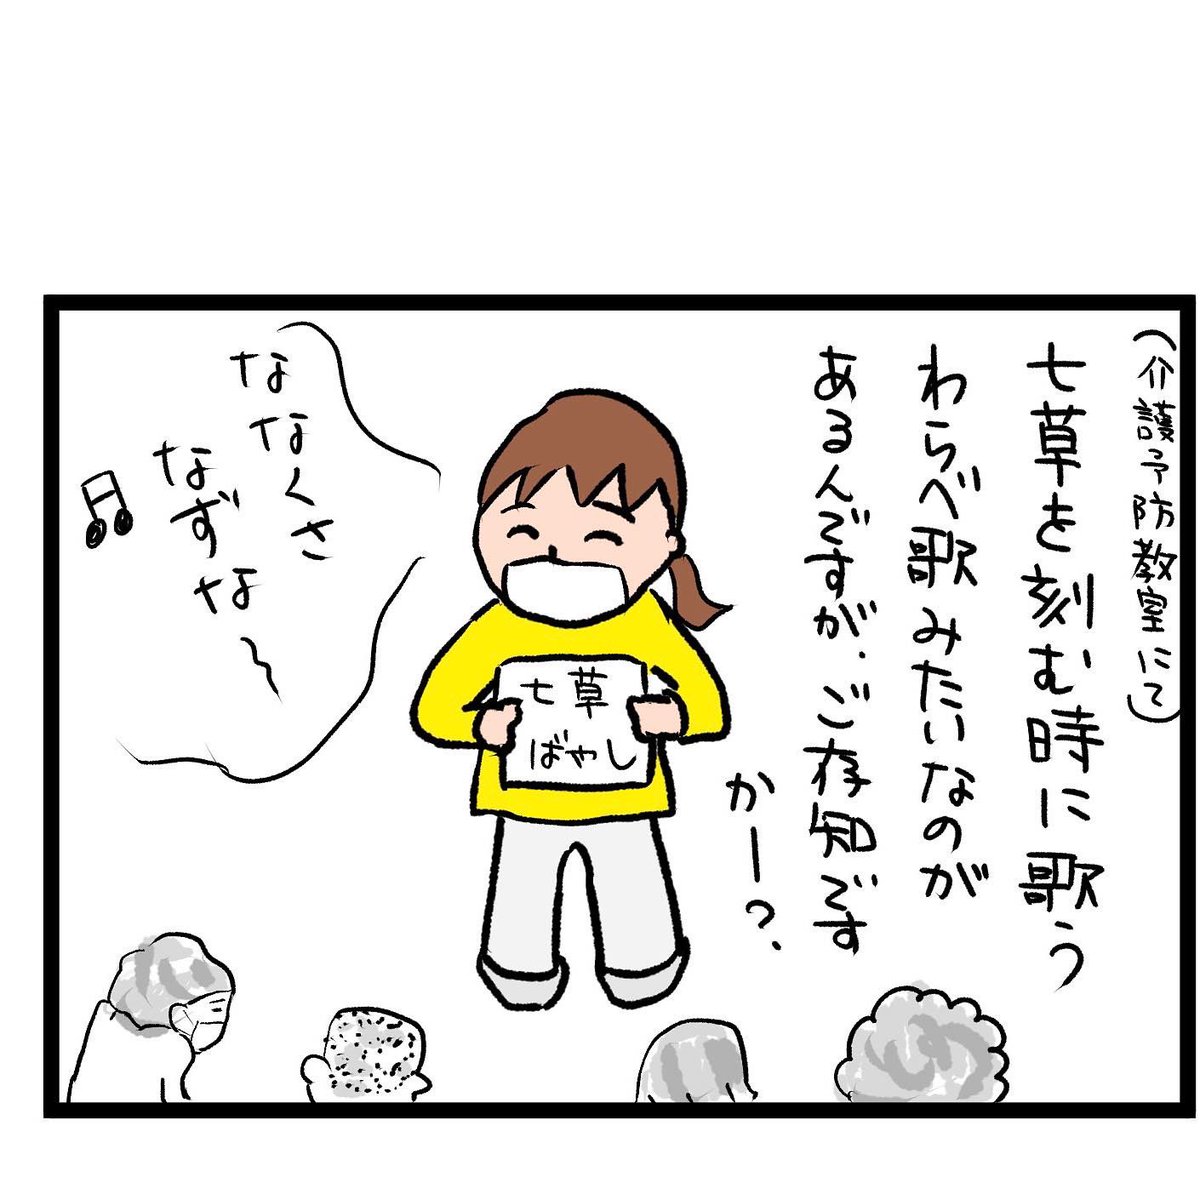 #四コマ漫画
#七草粥
七草囃子 